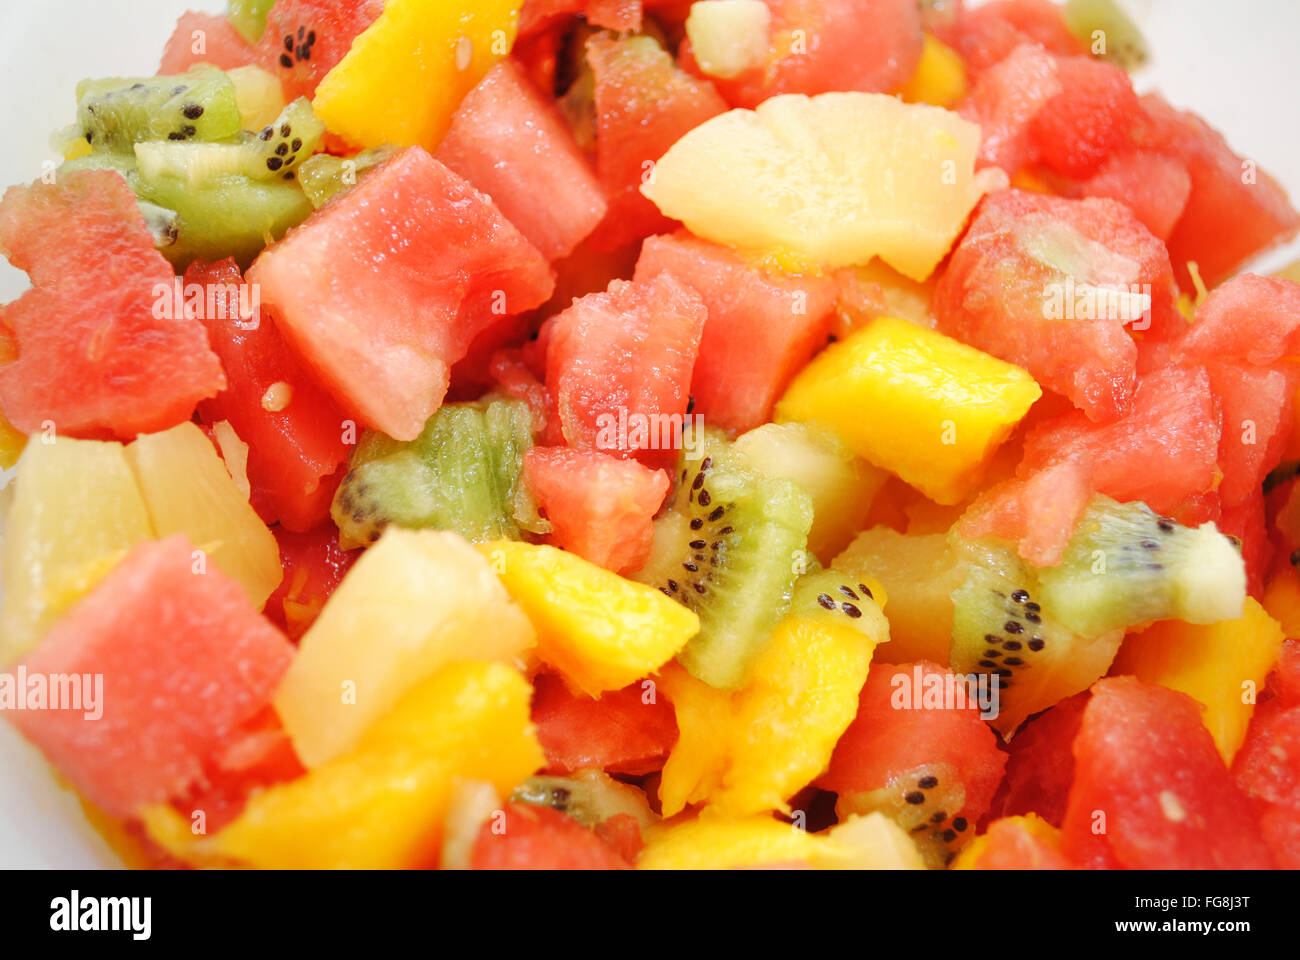 Tropical Fruit Salad with Melon, Mango, Kiwi and Pineapple Stock Photo